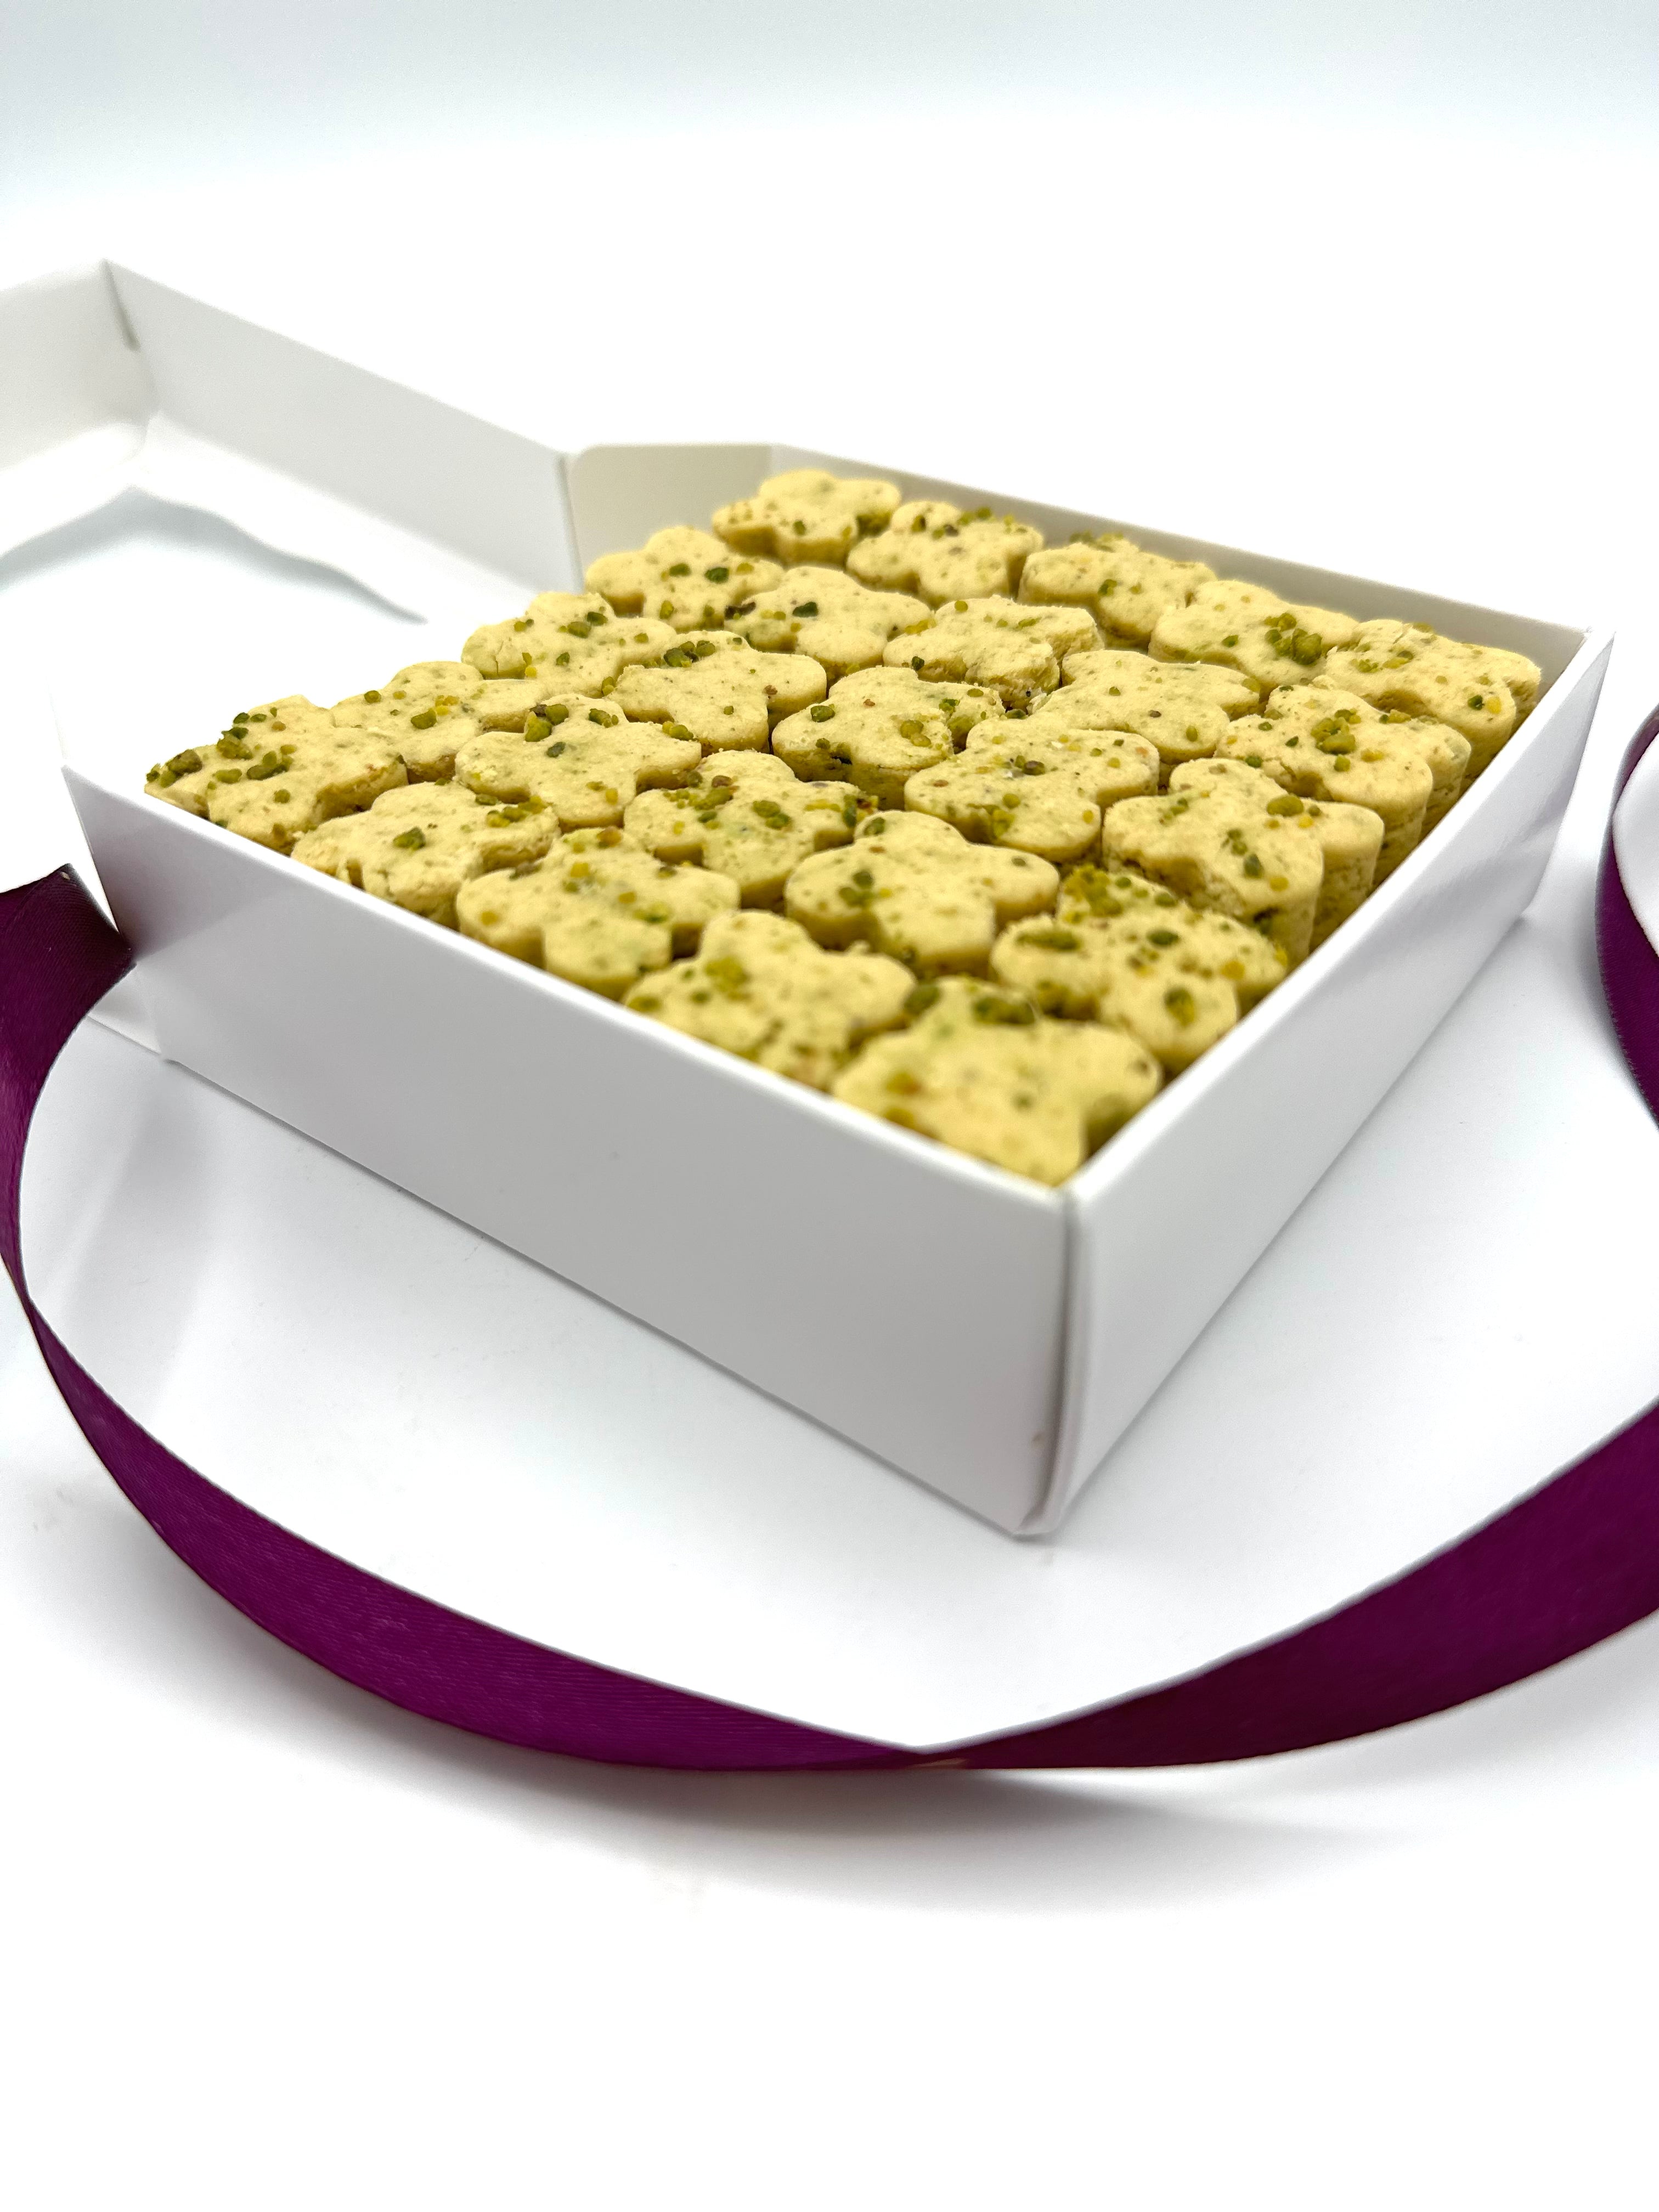 Persian Chickpeas Cookies/Nokhodchi with pistachios